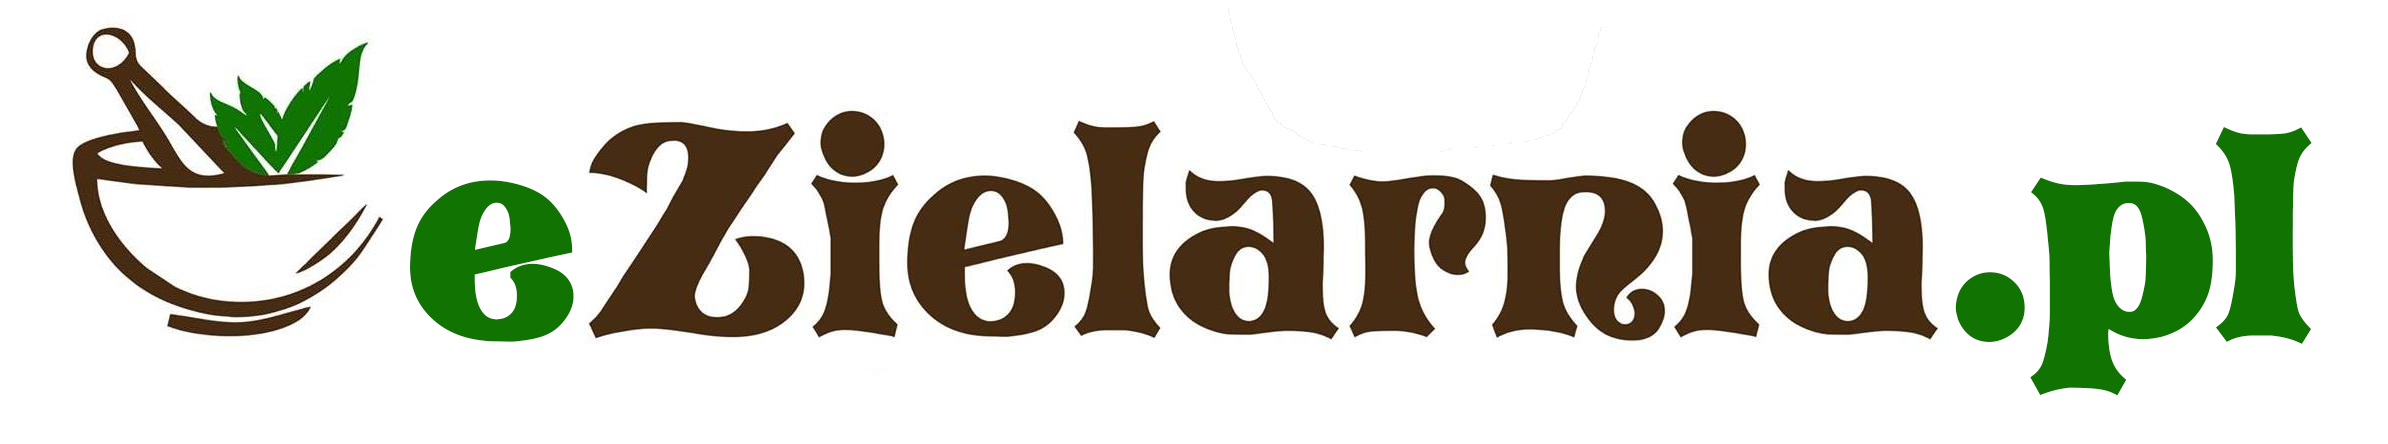 ezielarnia.pl logo